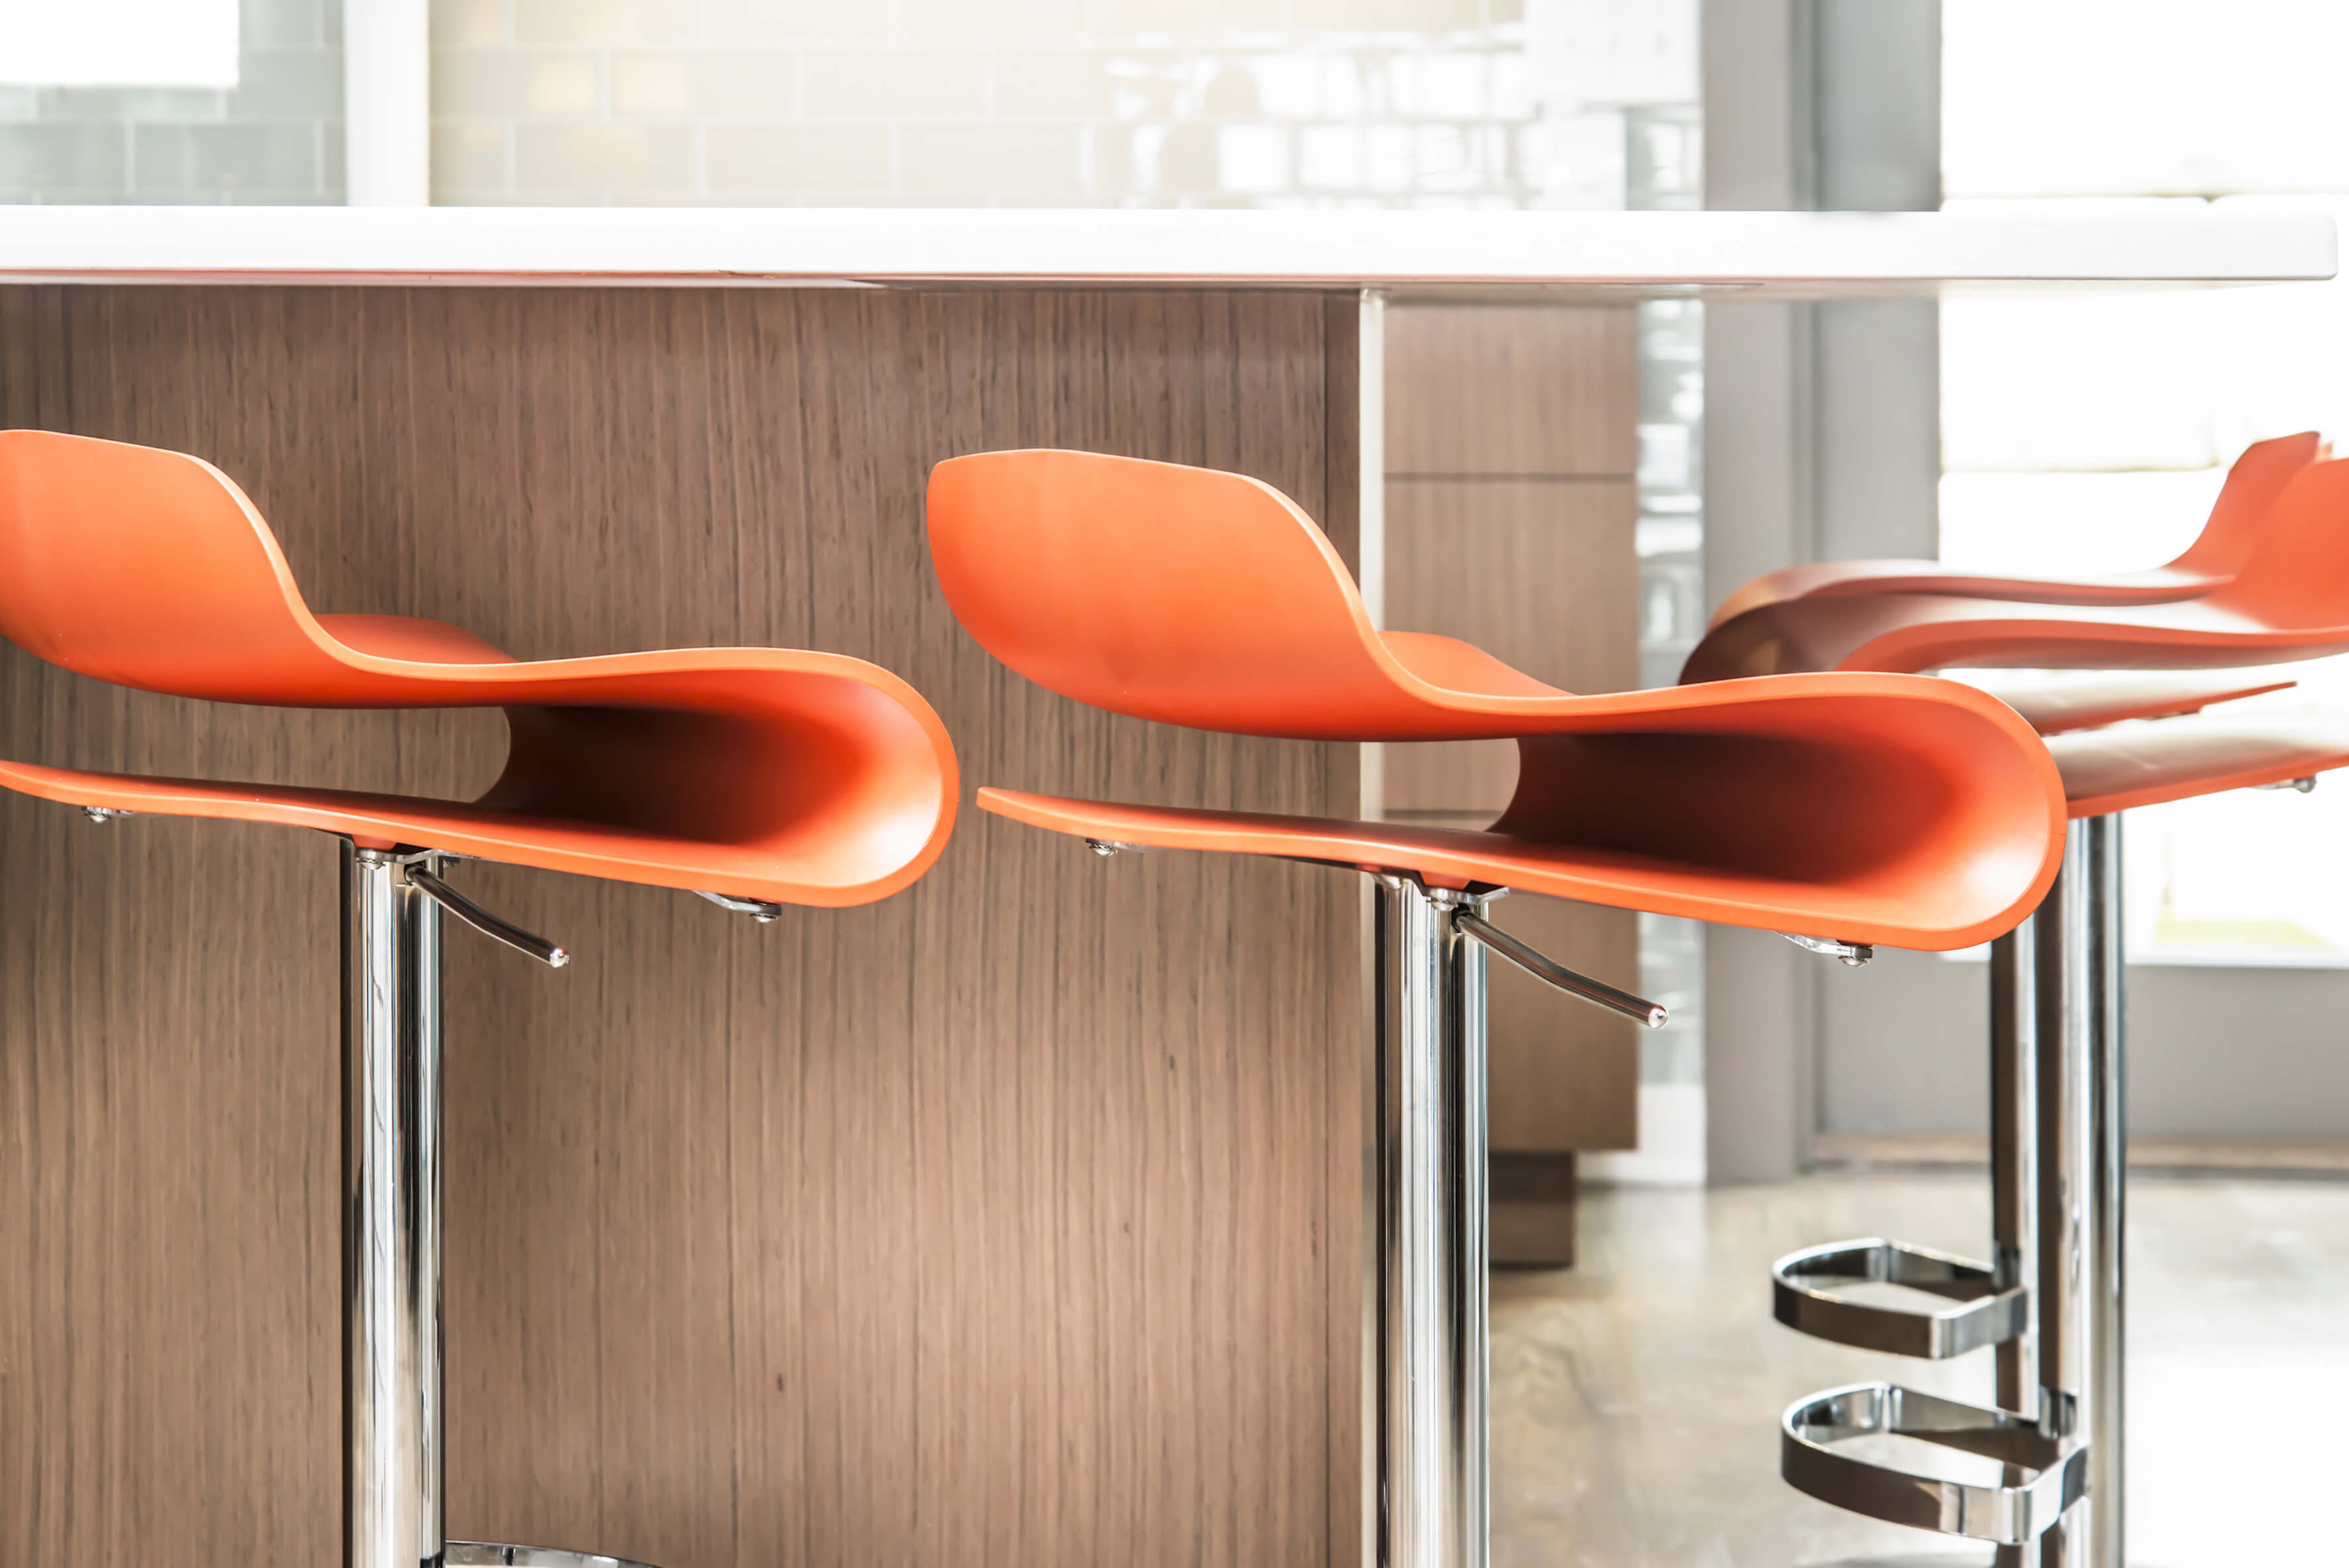 Detail shot of modern orange stools in a contemporary kitchen. Designed by Cincinnati Interior Designer, RM Interiors.